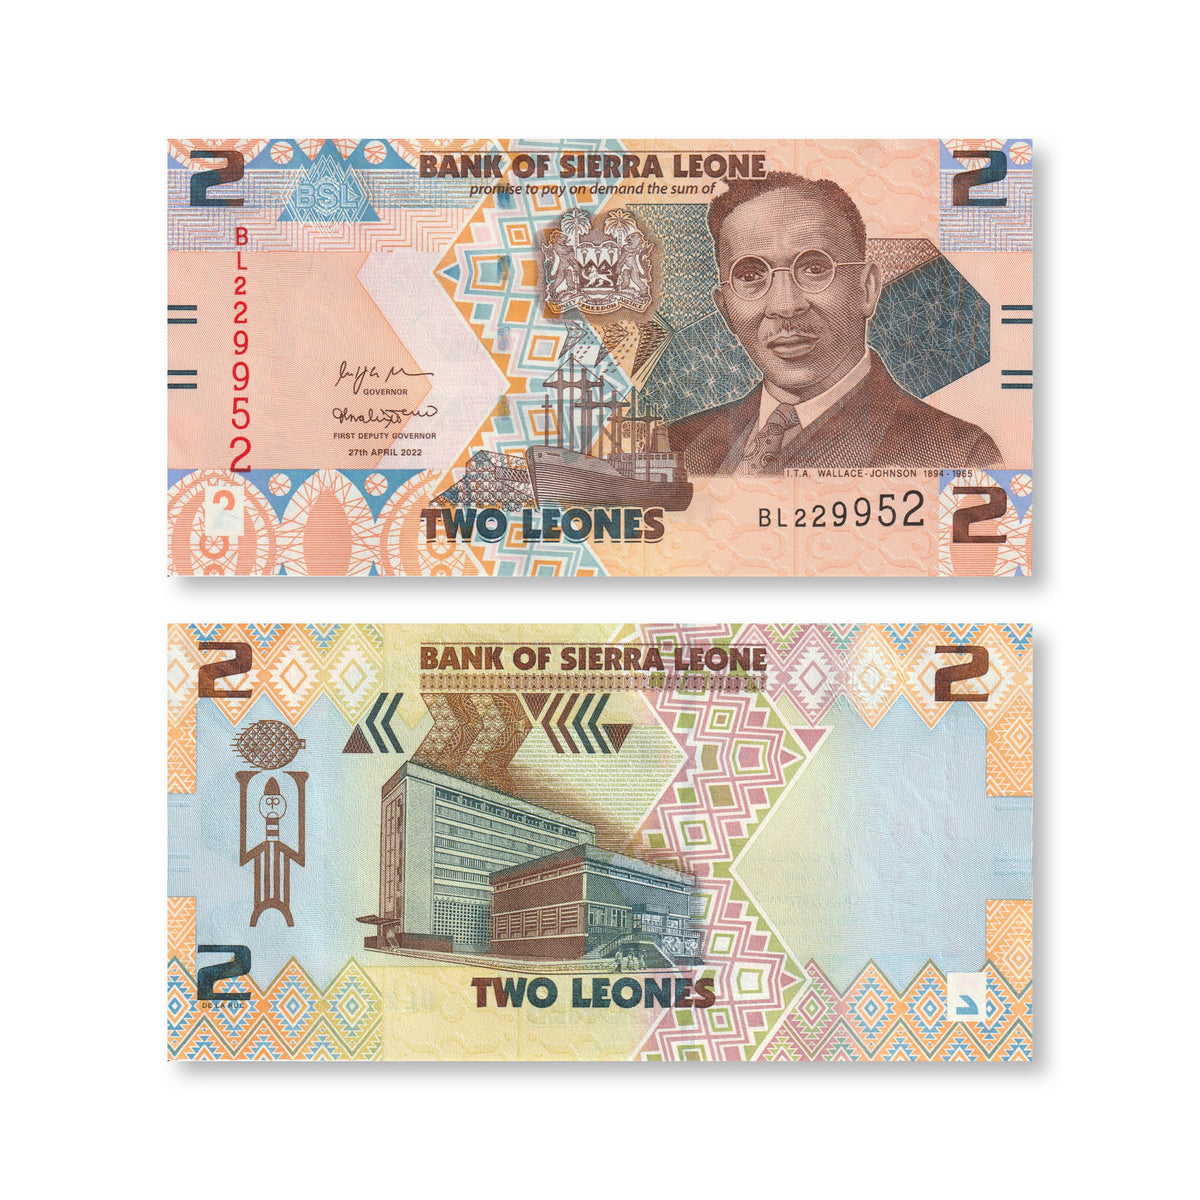 Sierra Leone 2 Leones, 2022, B130a, UNC - Robert's World Money - World Banknotes